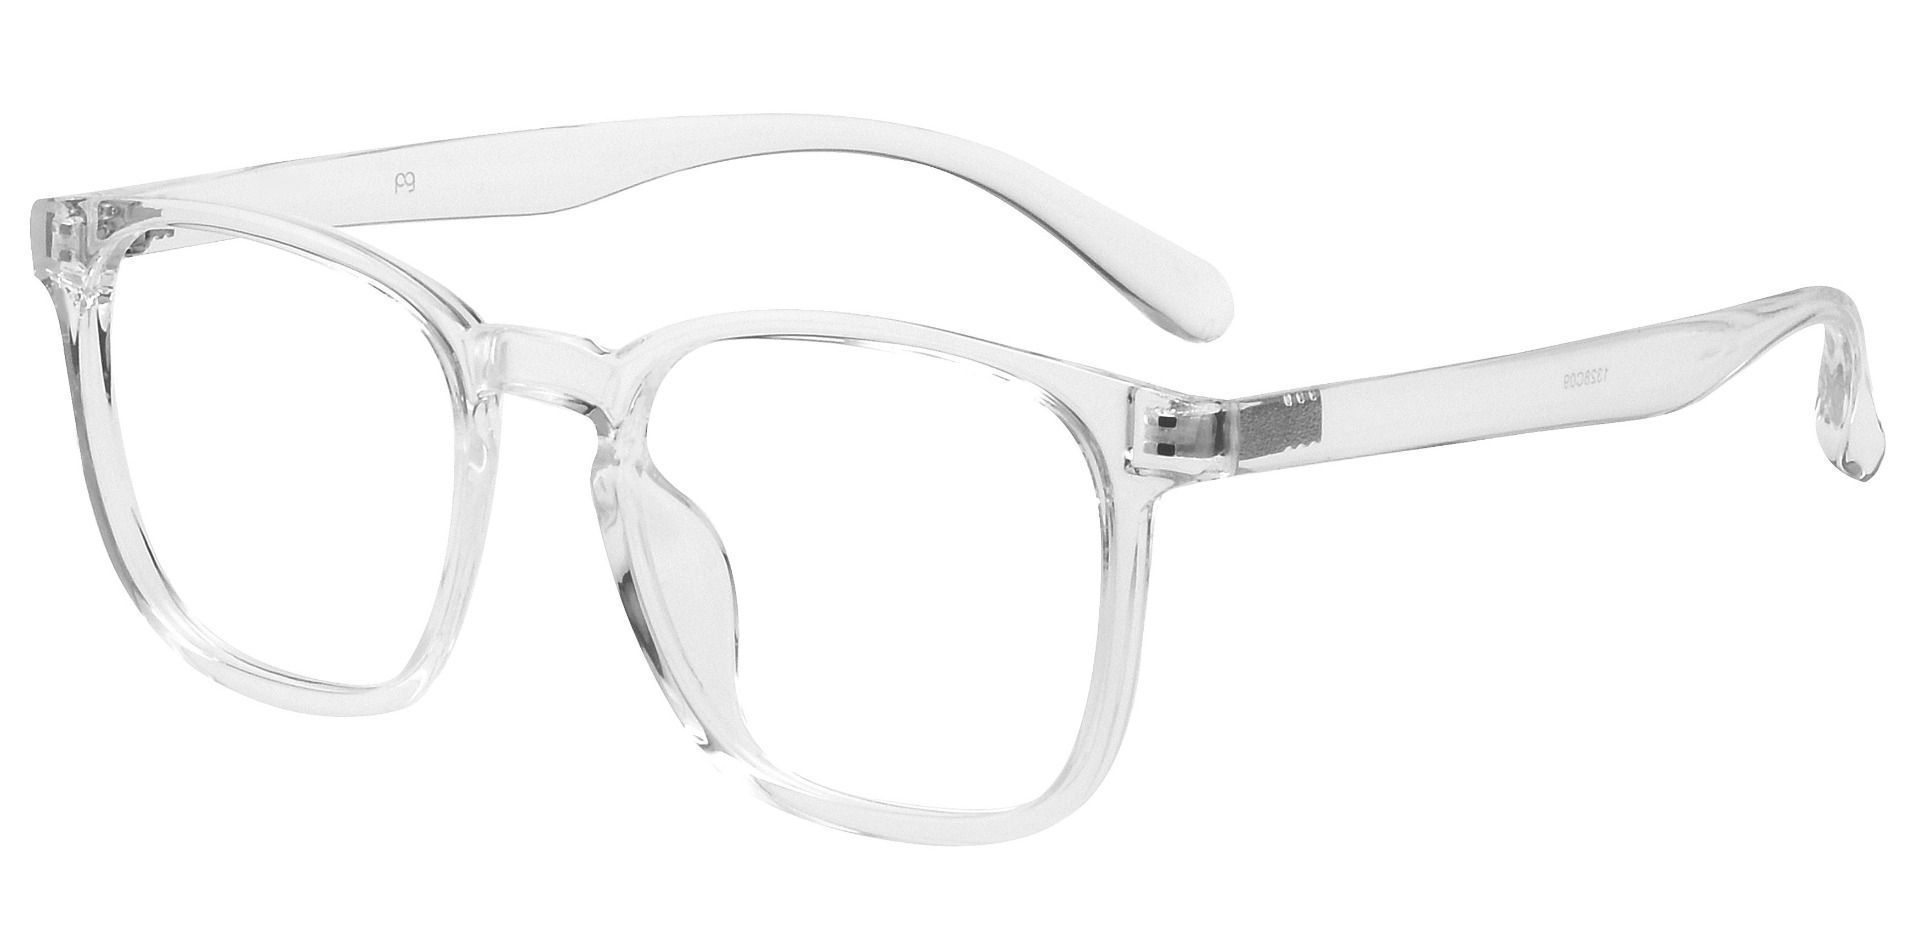 Dusk Classic Square Prescription Glasses - Clear | Women's Eyeglasses ...